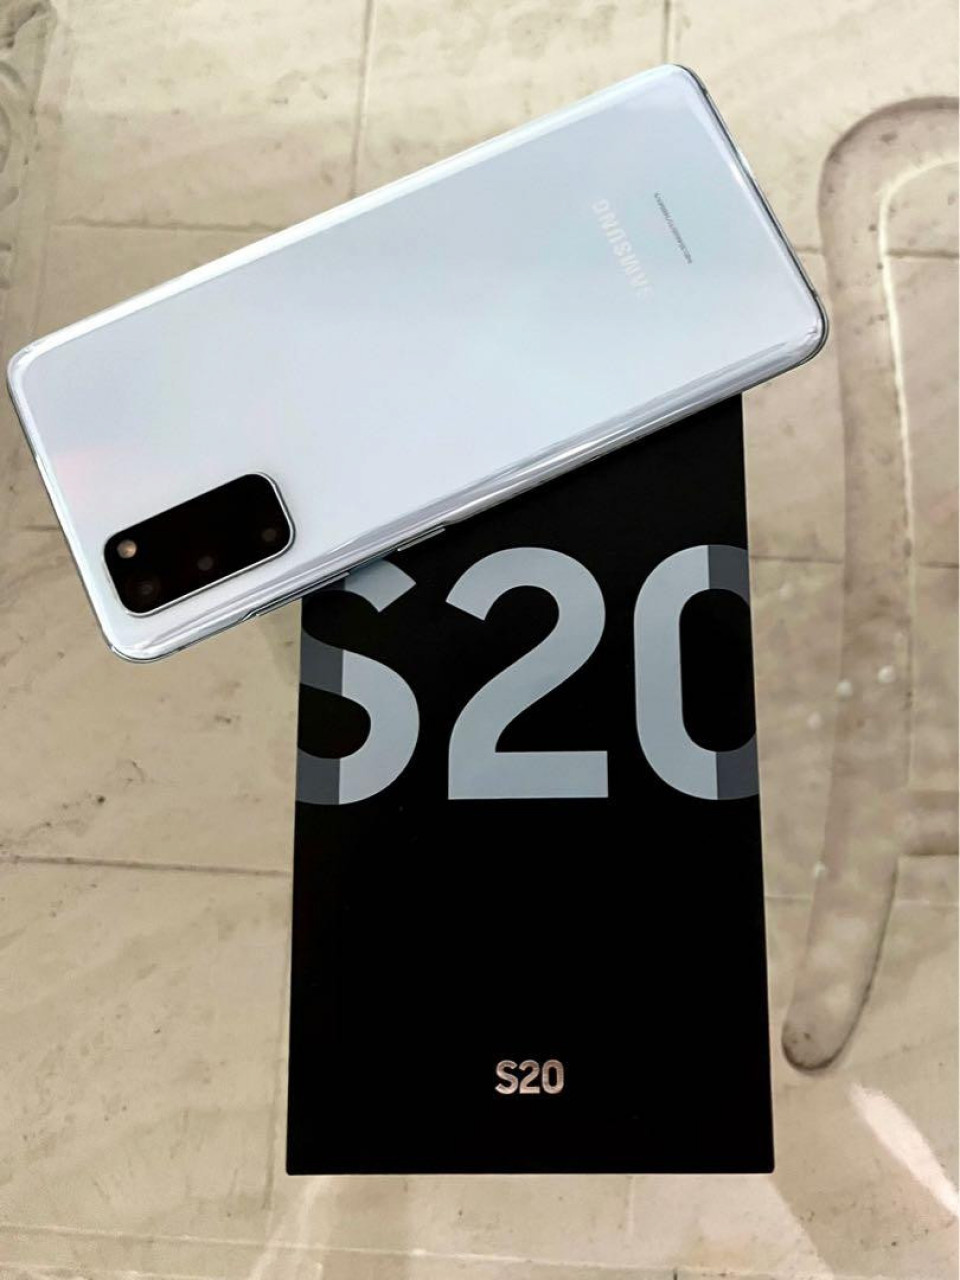 Samsung Galaxy S20, Téléphones Mobiles, Conakry